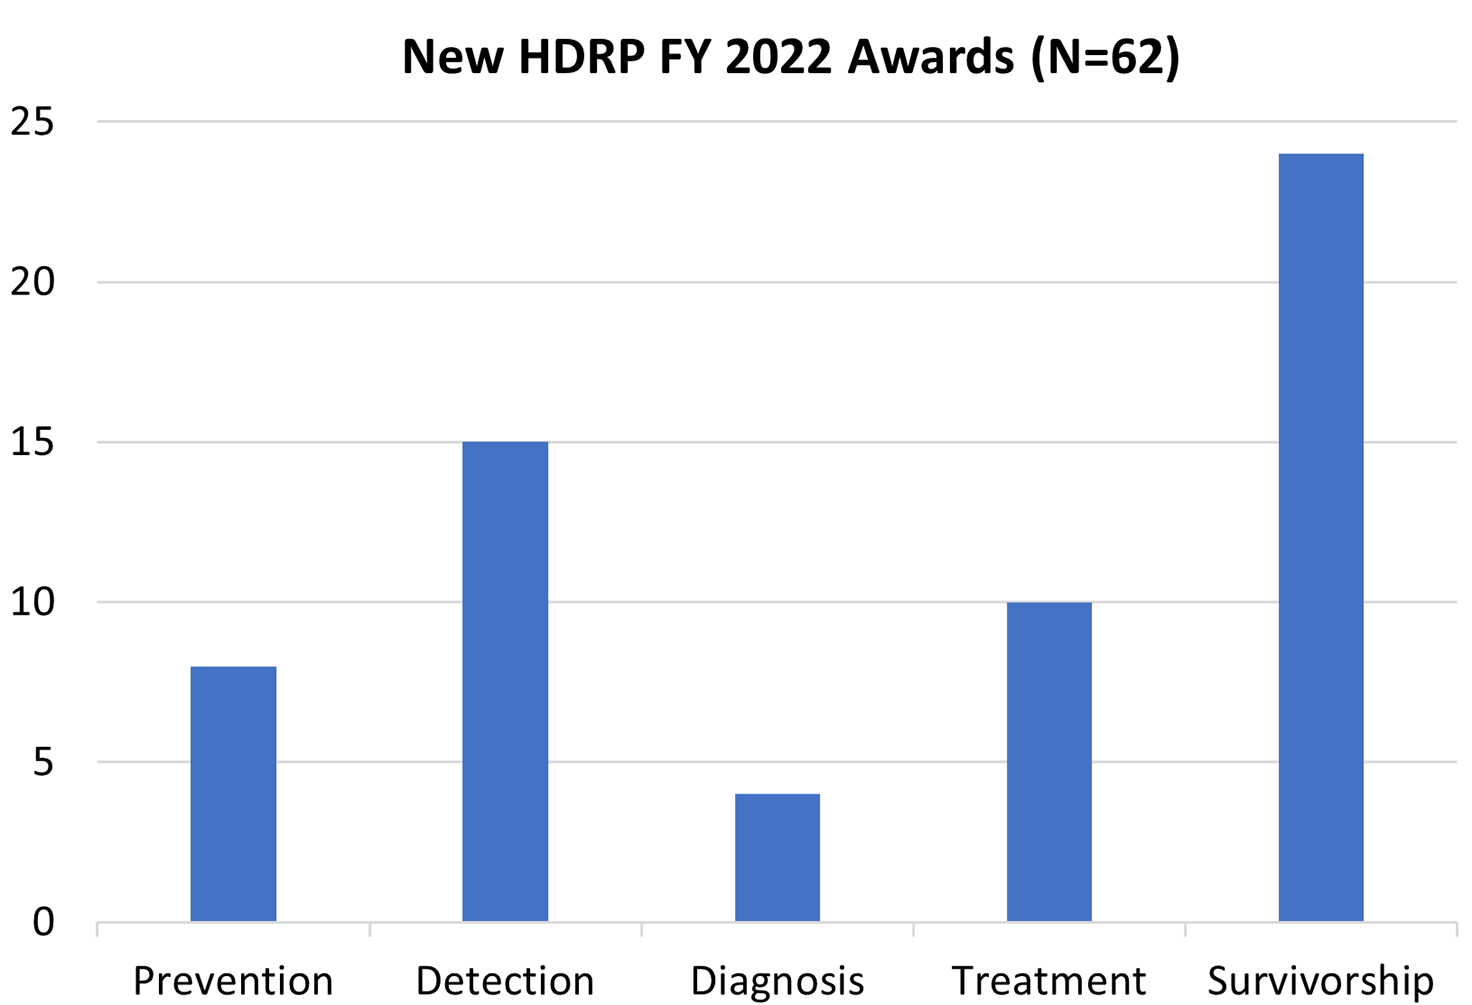 New HDRP 2022 awards: Prevention - 8, Detection - 15, Diagnosis - 4, Treatment - 10, Survivorship - 24. 62 total.